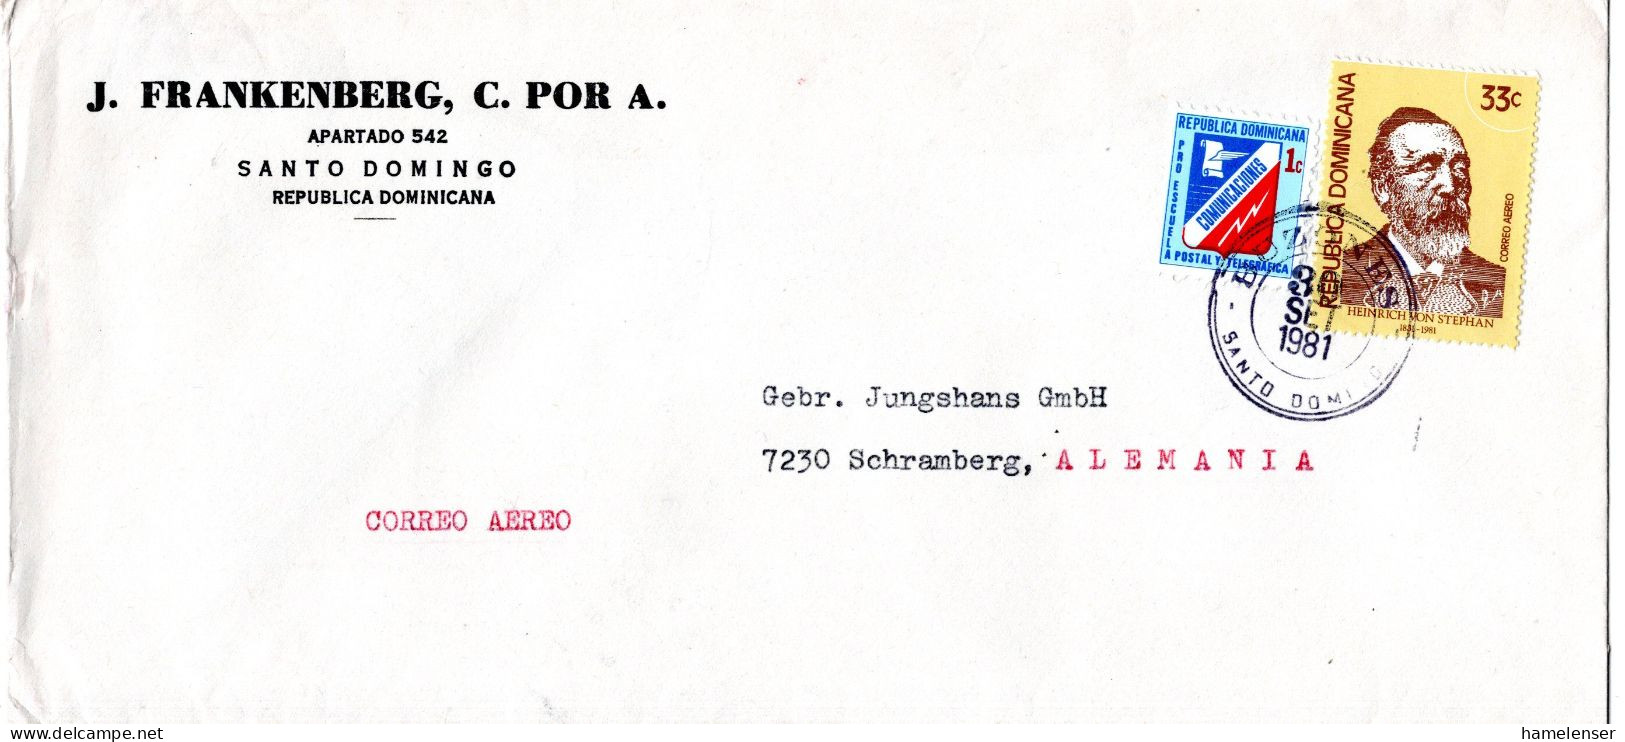 L78962 - Dominikanische Republik - 1981 - 33c H.v.Stephan EF A LpBf SANTO DOMINGO -> Westdeutschland - UPU (Universal Postal Union)